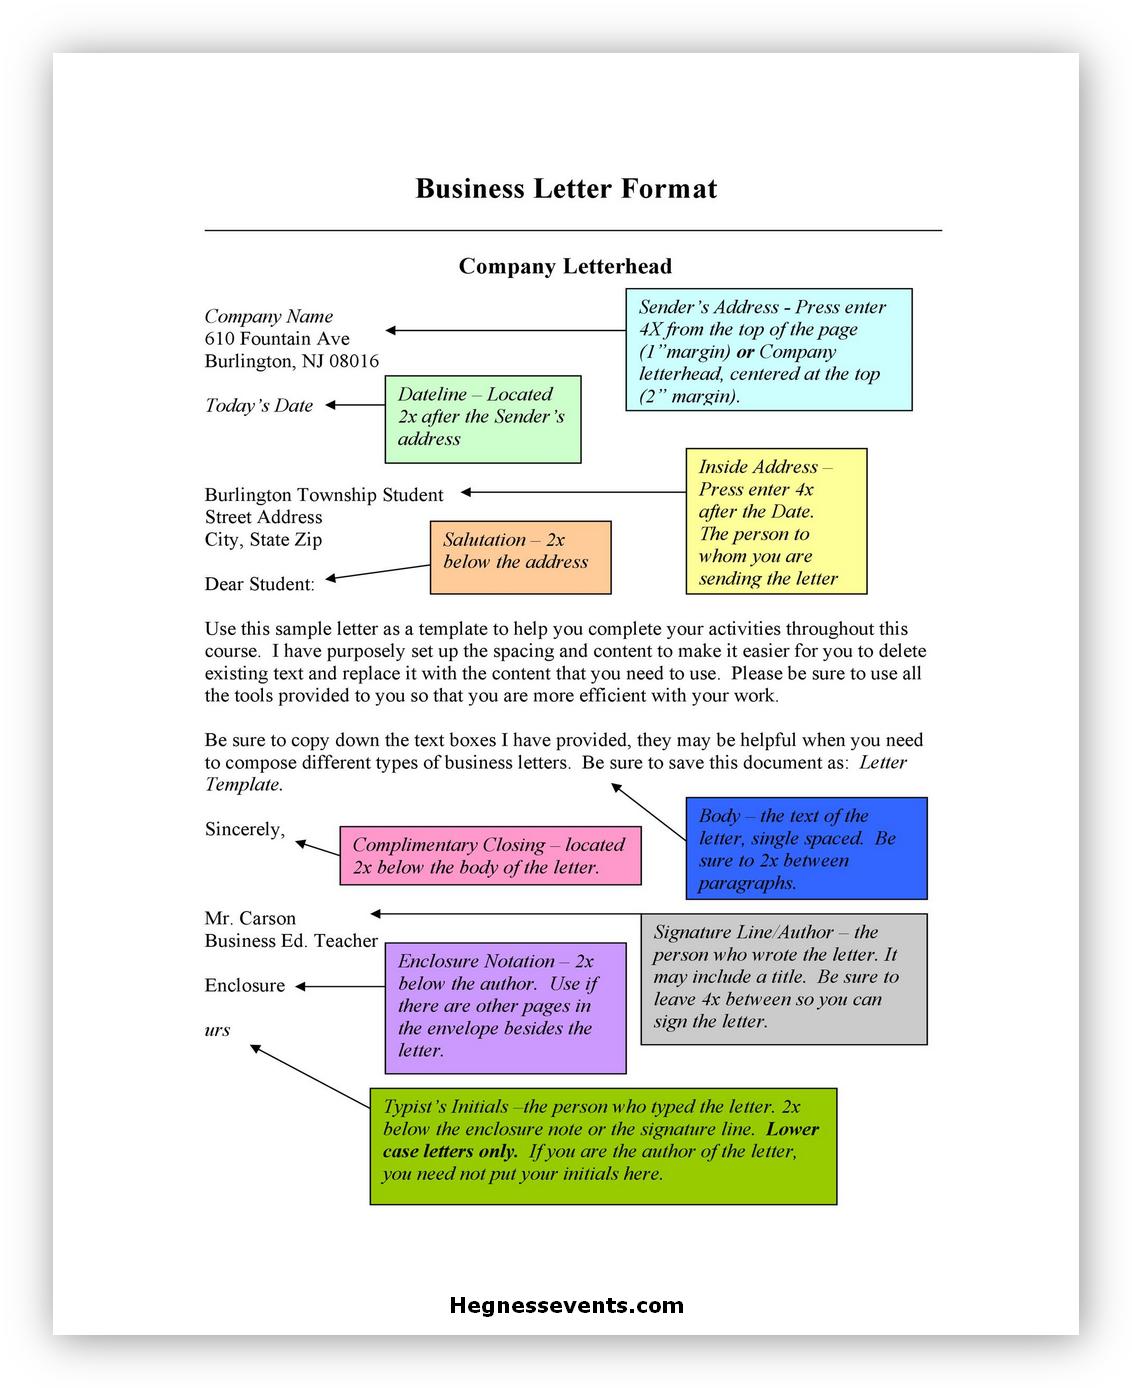 Business letter Format 05